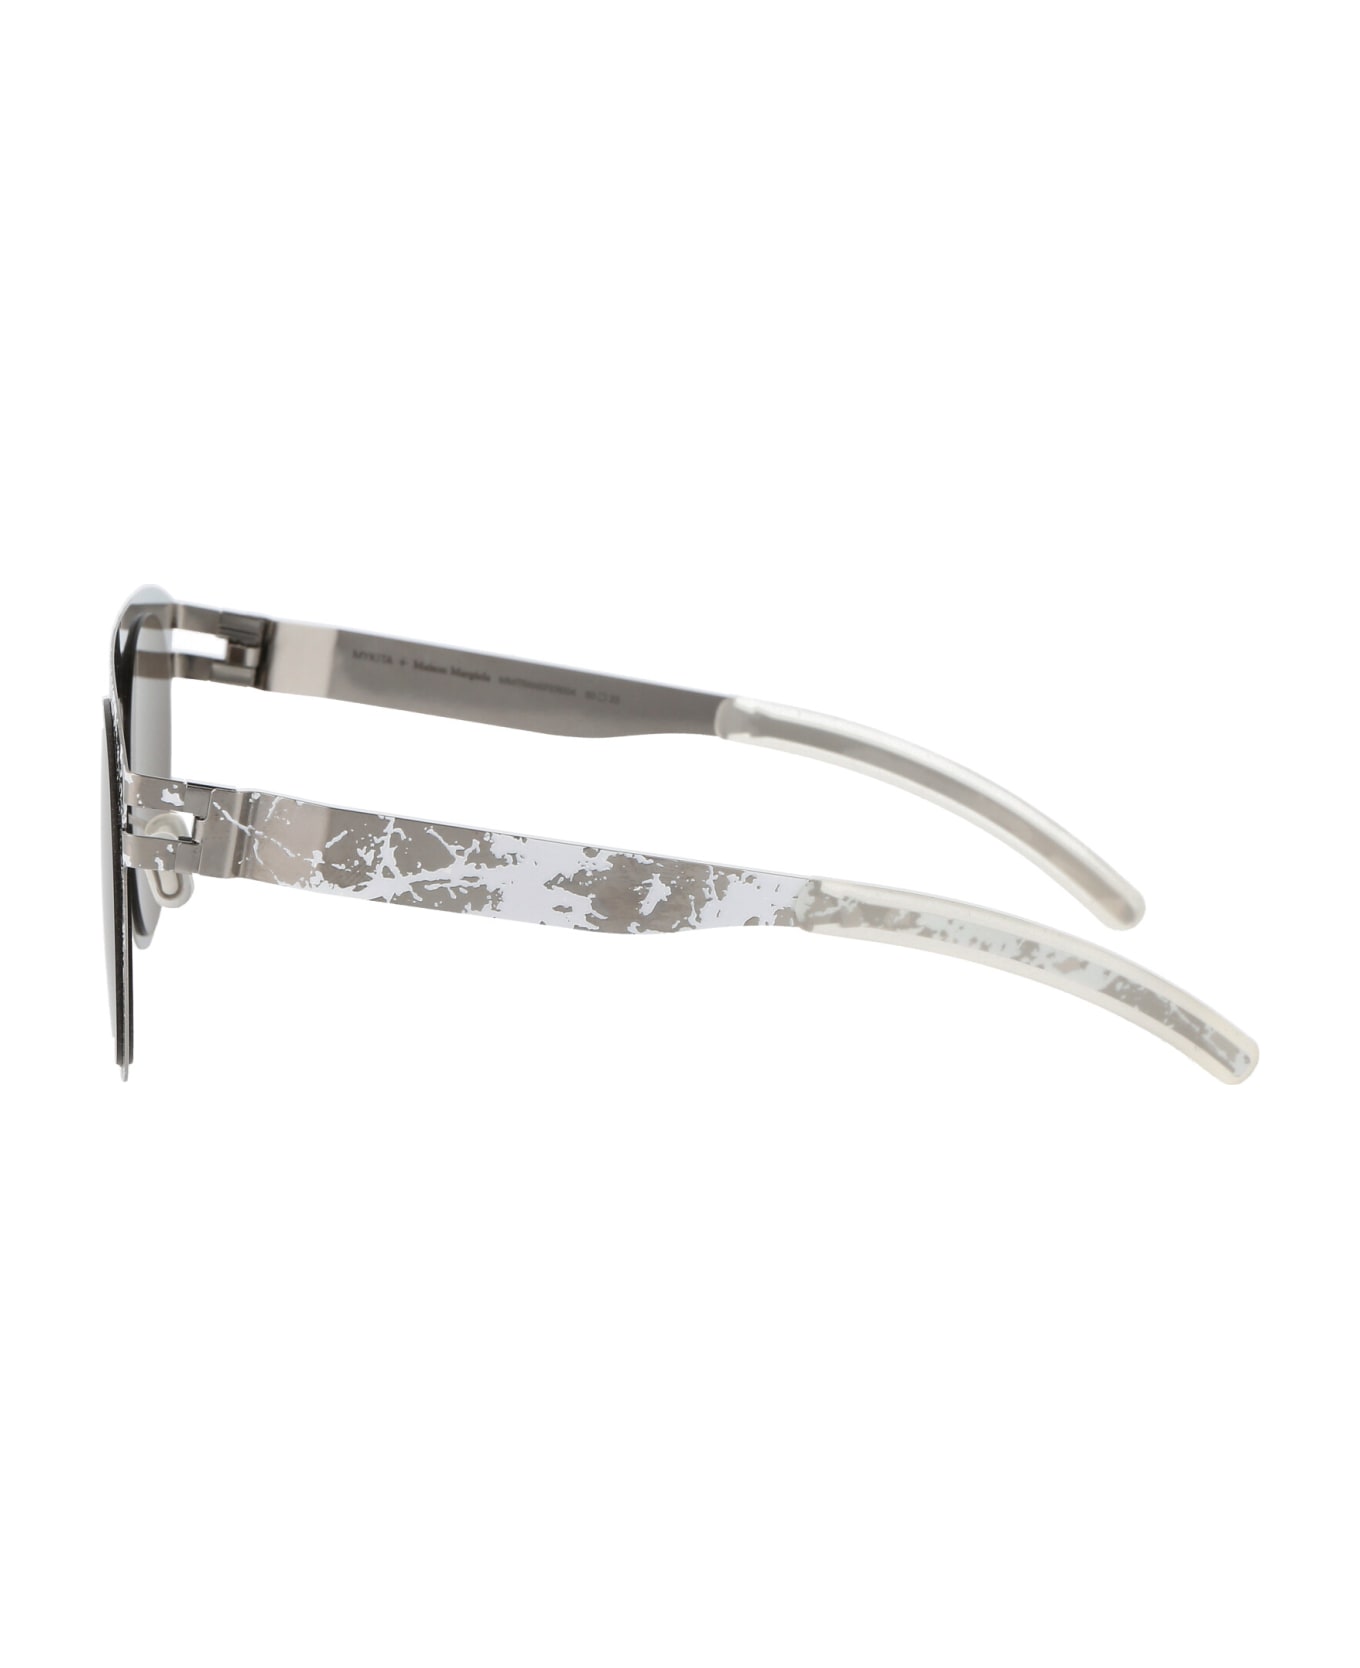 Mykita Mmtransfer004 Sunglasses - 265 Silver White Stone Brown Flash